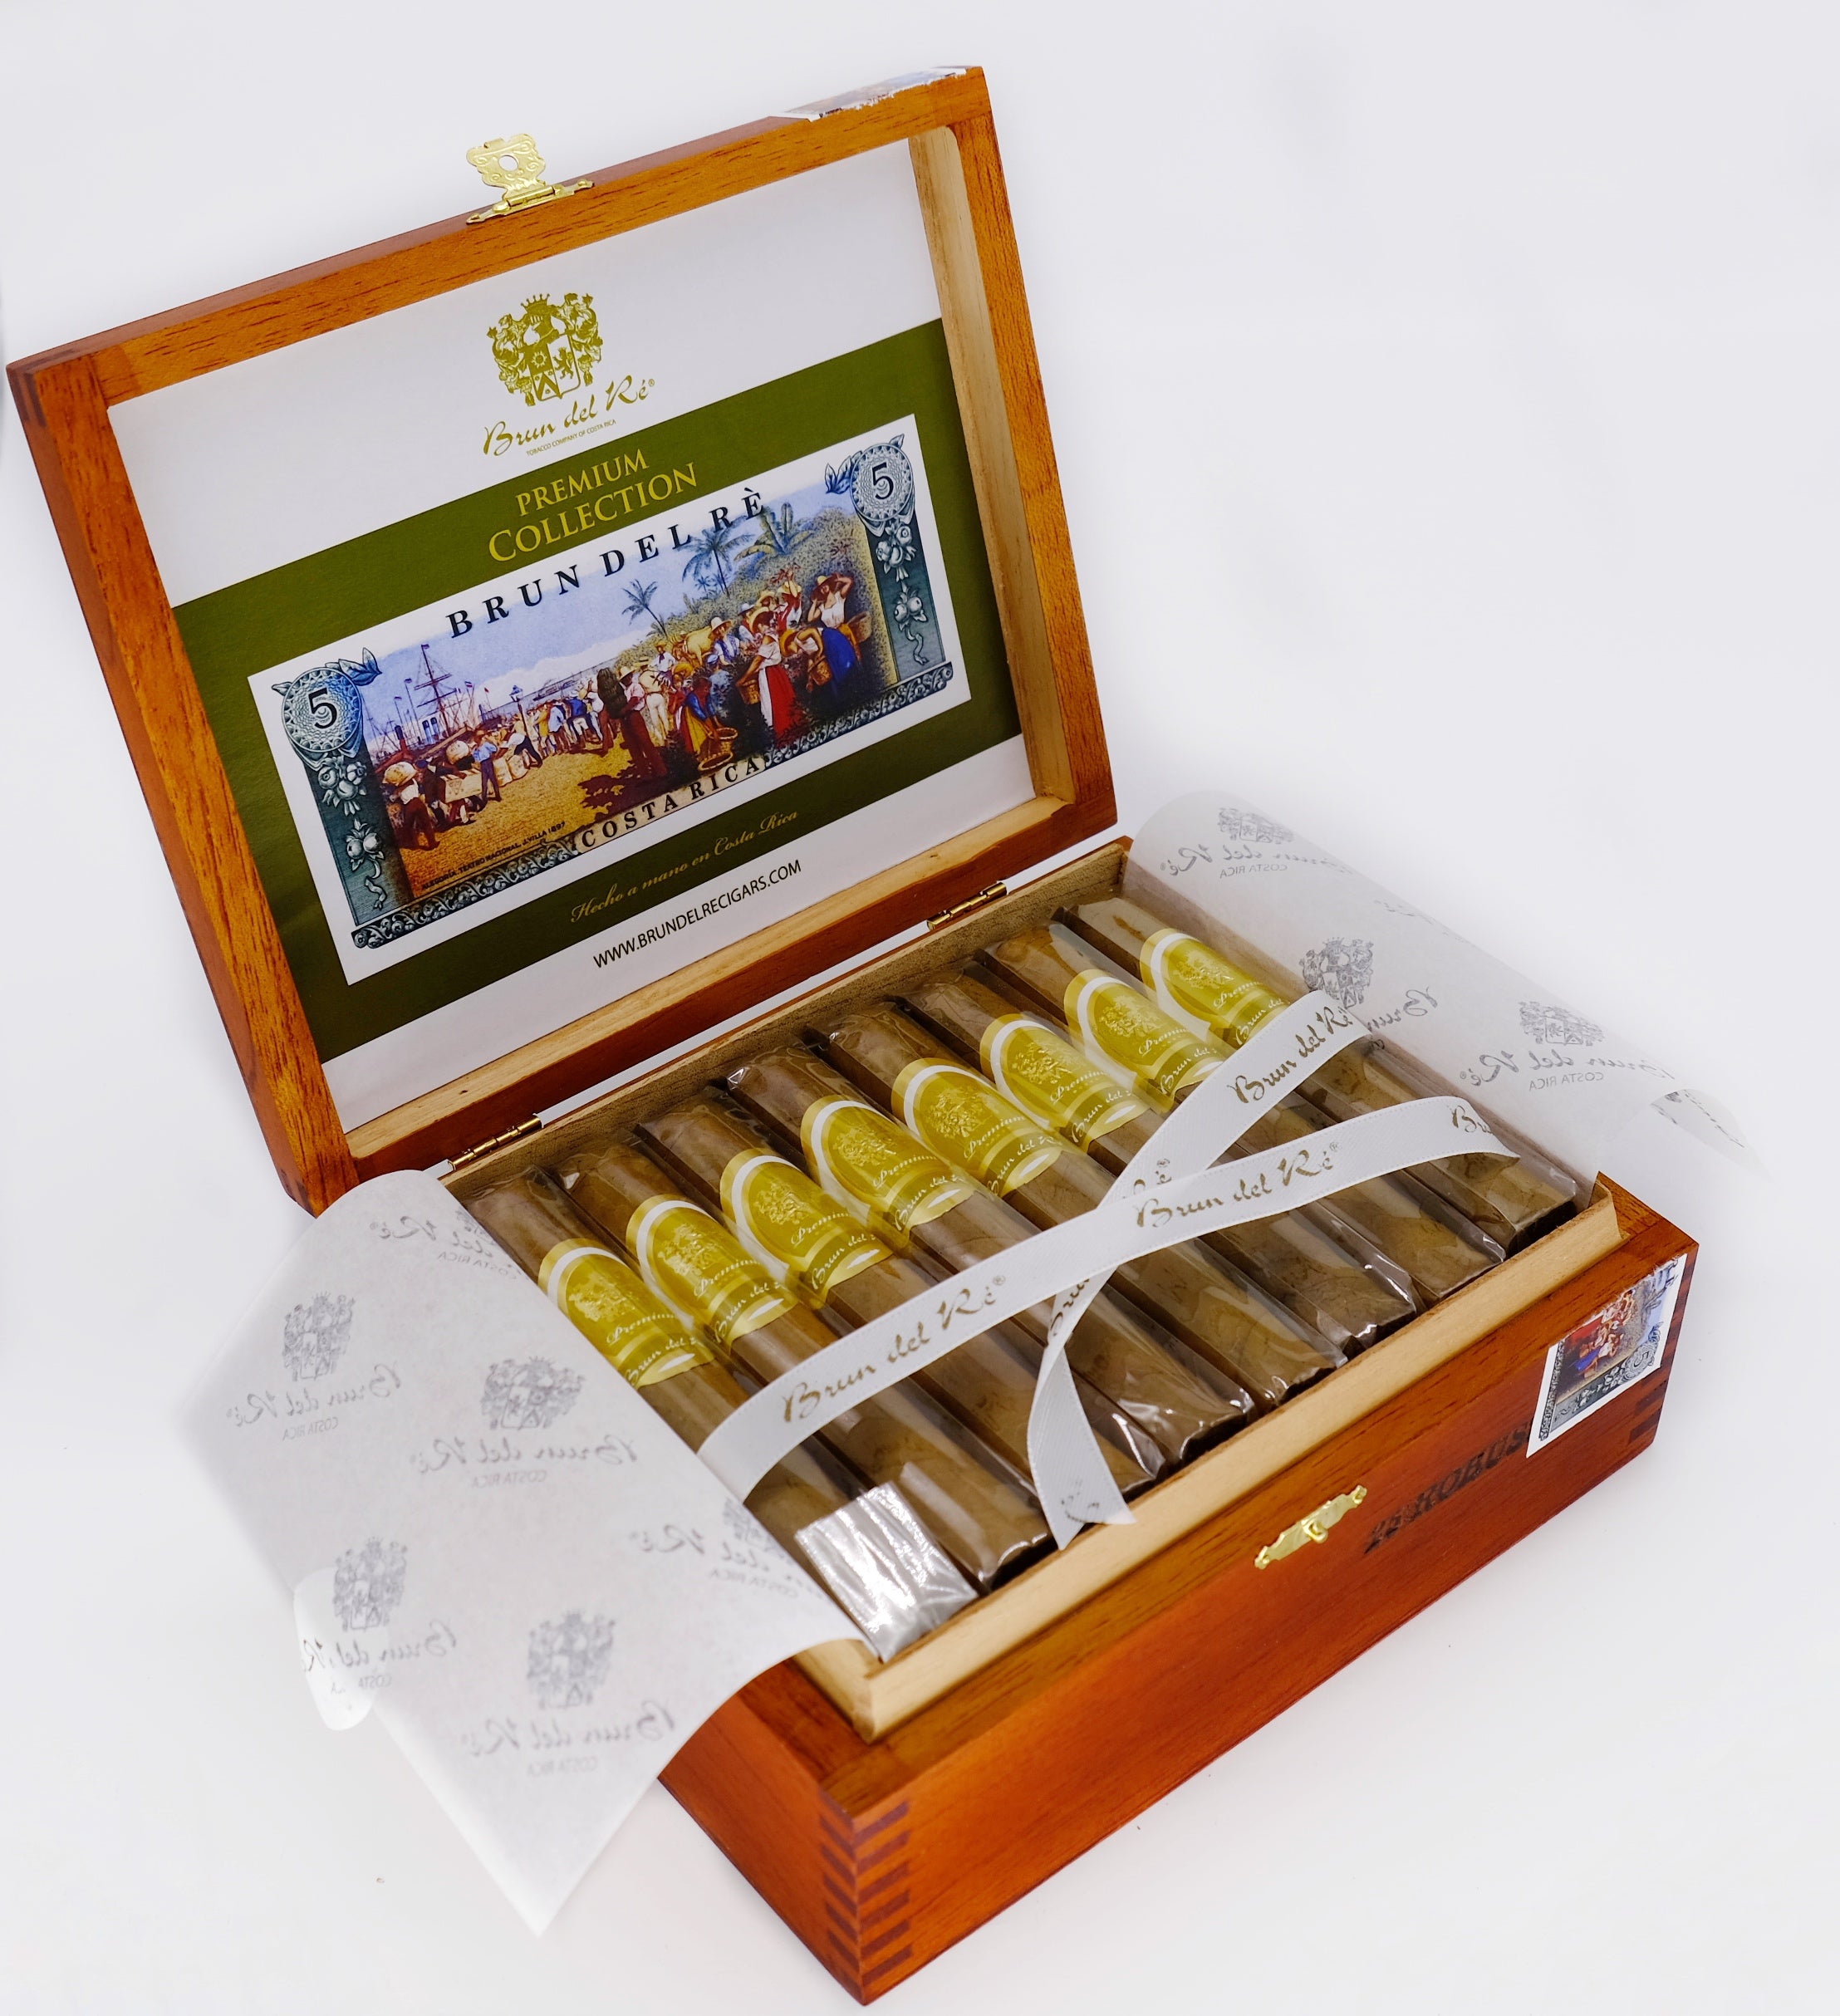 Brun del Re Premium Collection Robusto, 25er Zigarren Kiste geöffnet